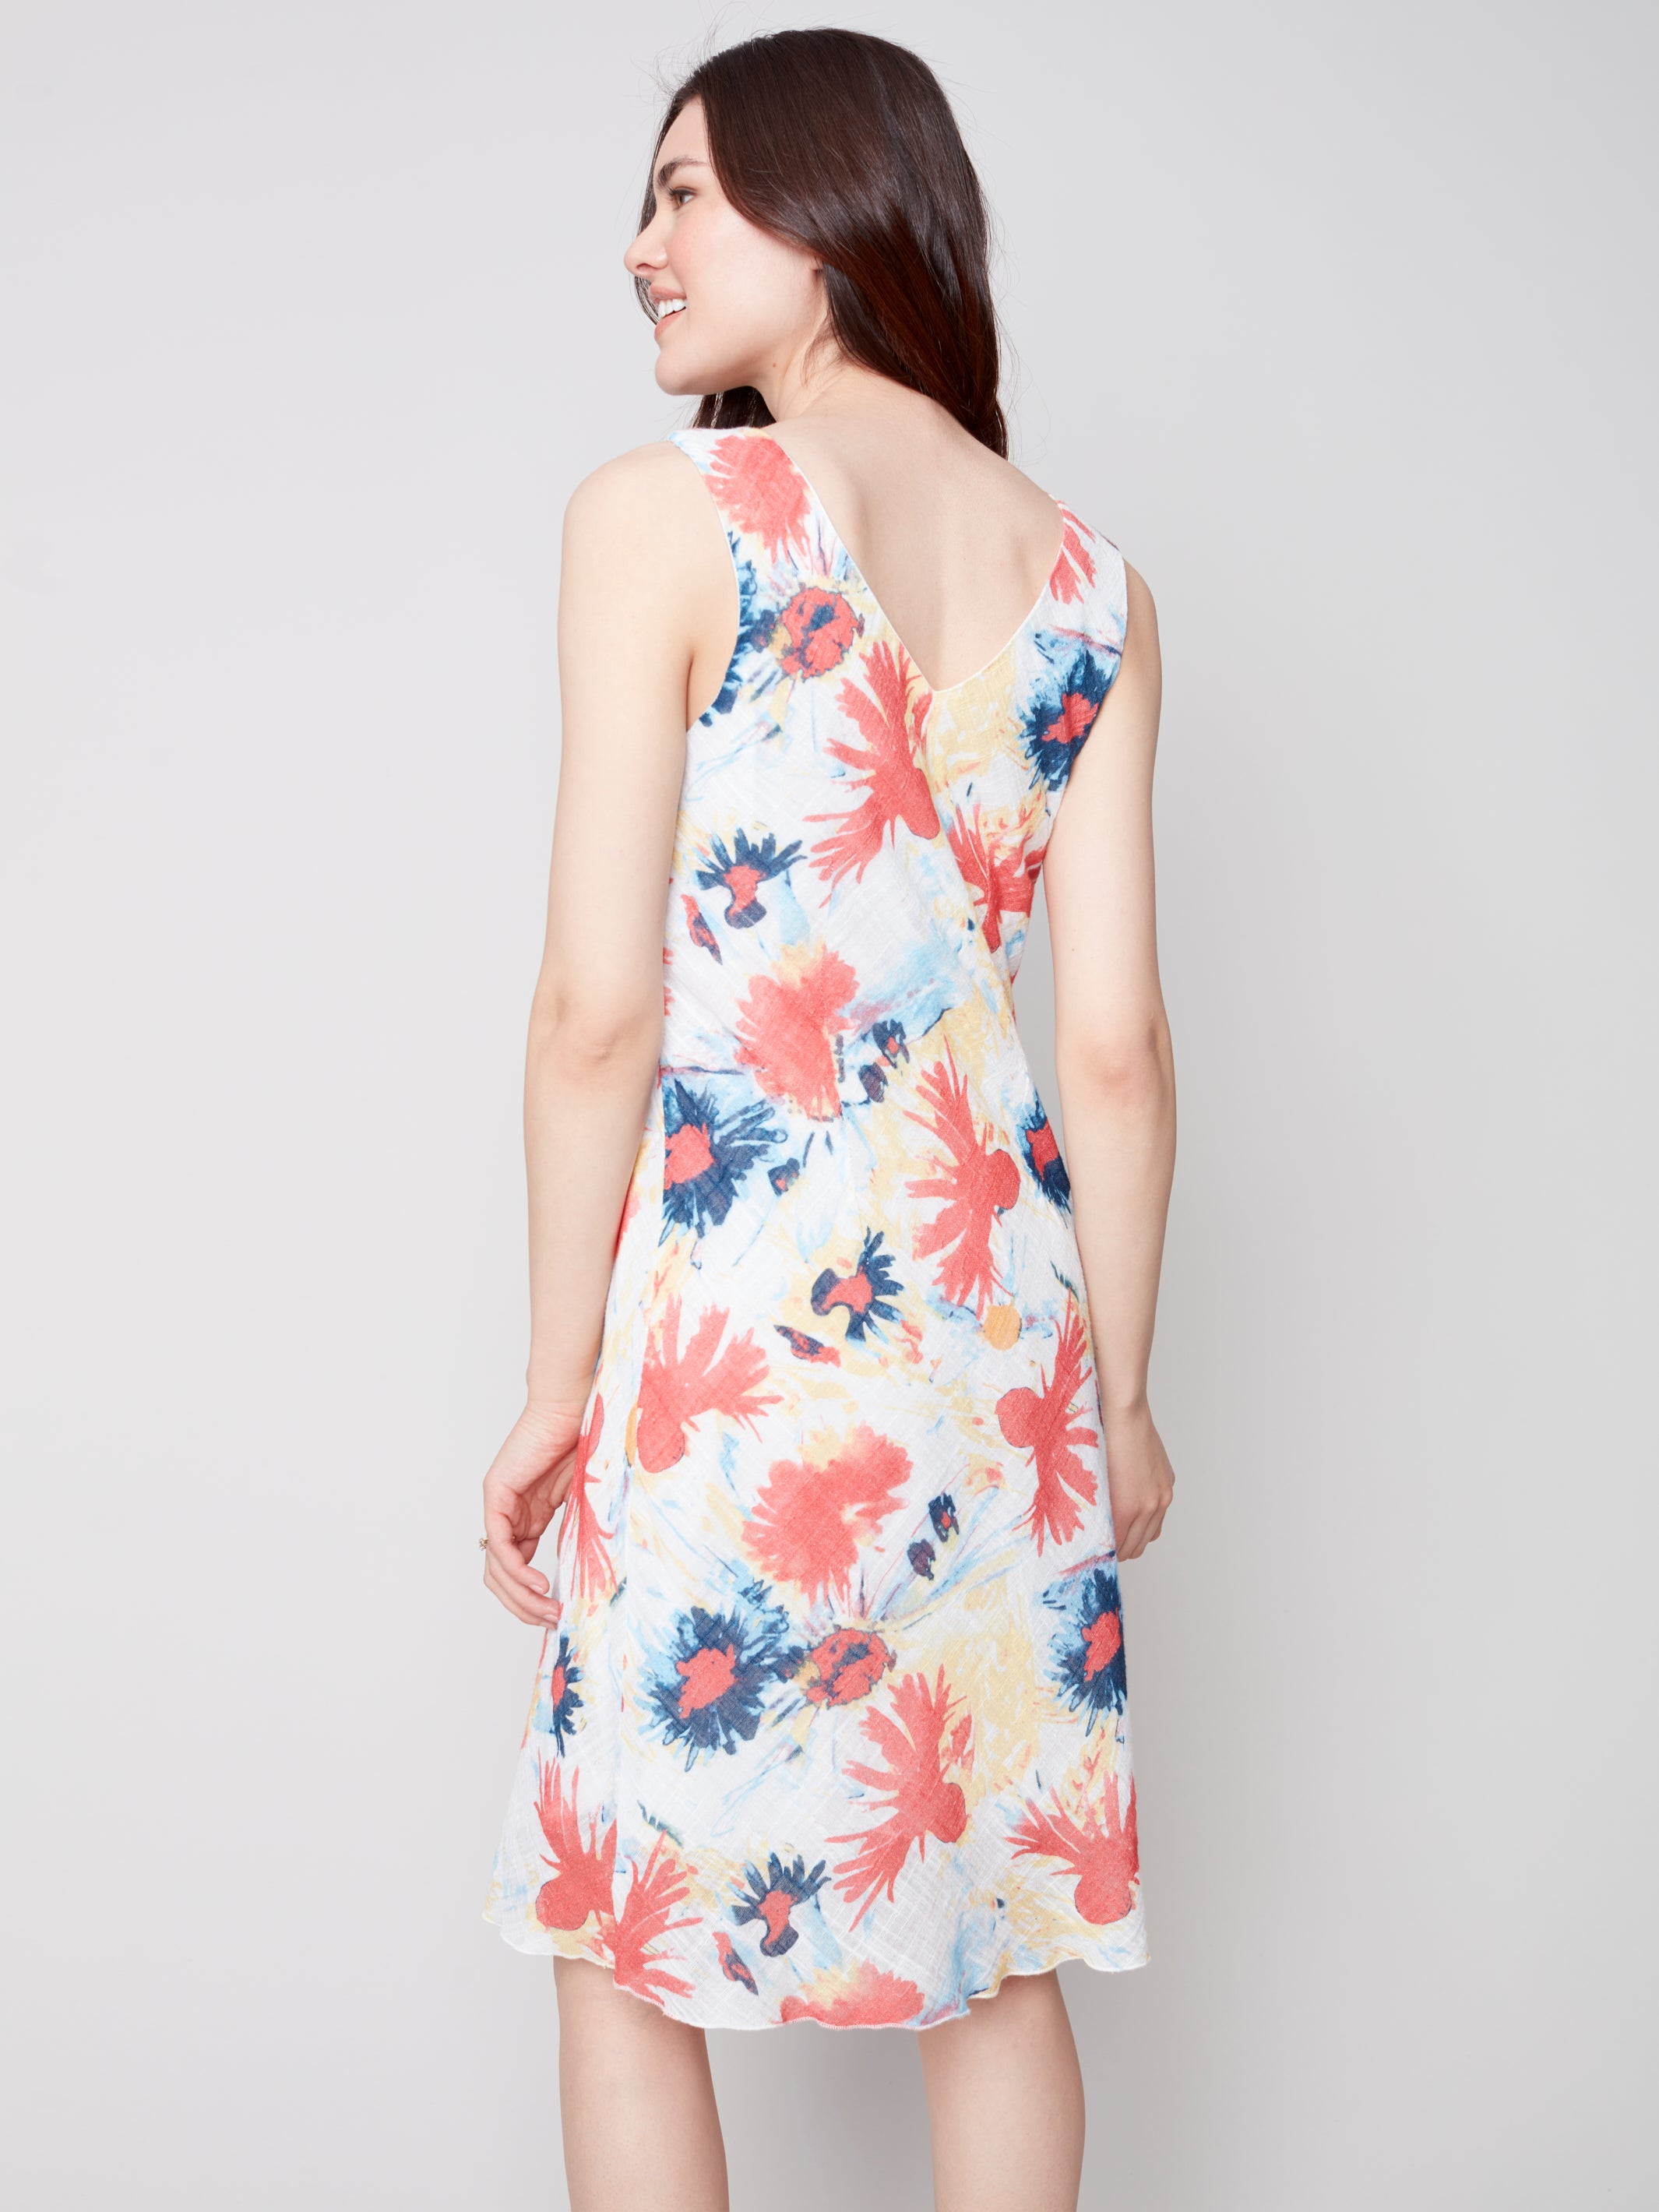 Sleeveless V-Neck Poppy Print Dress by Charlie B